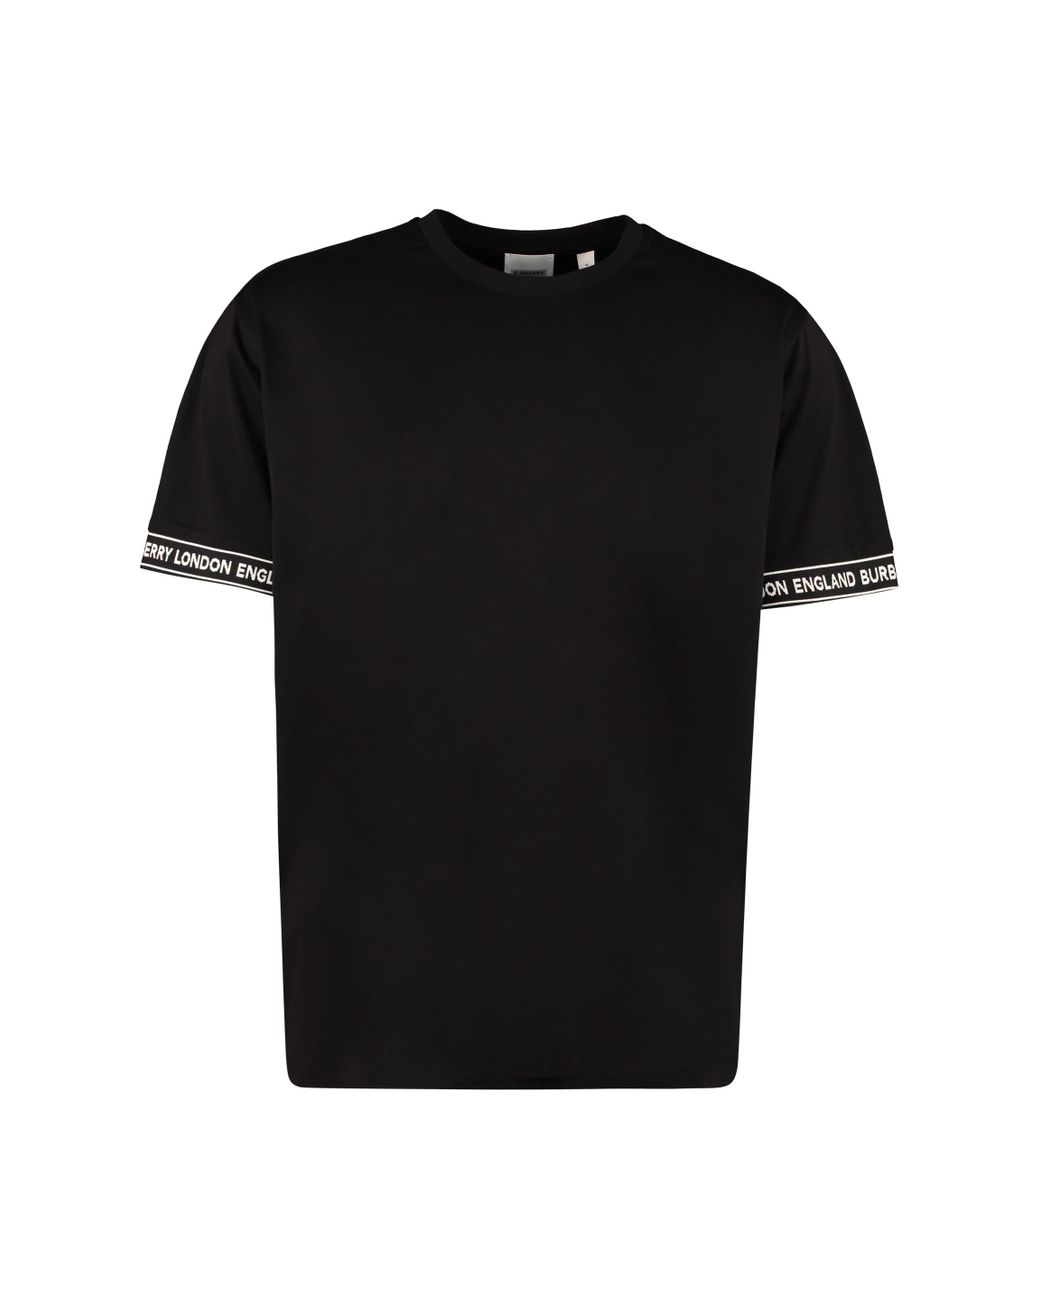 Burberry Oversize Cotton T-shirt in Black for Men - Lyst